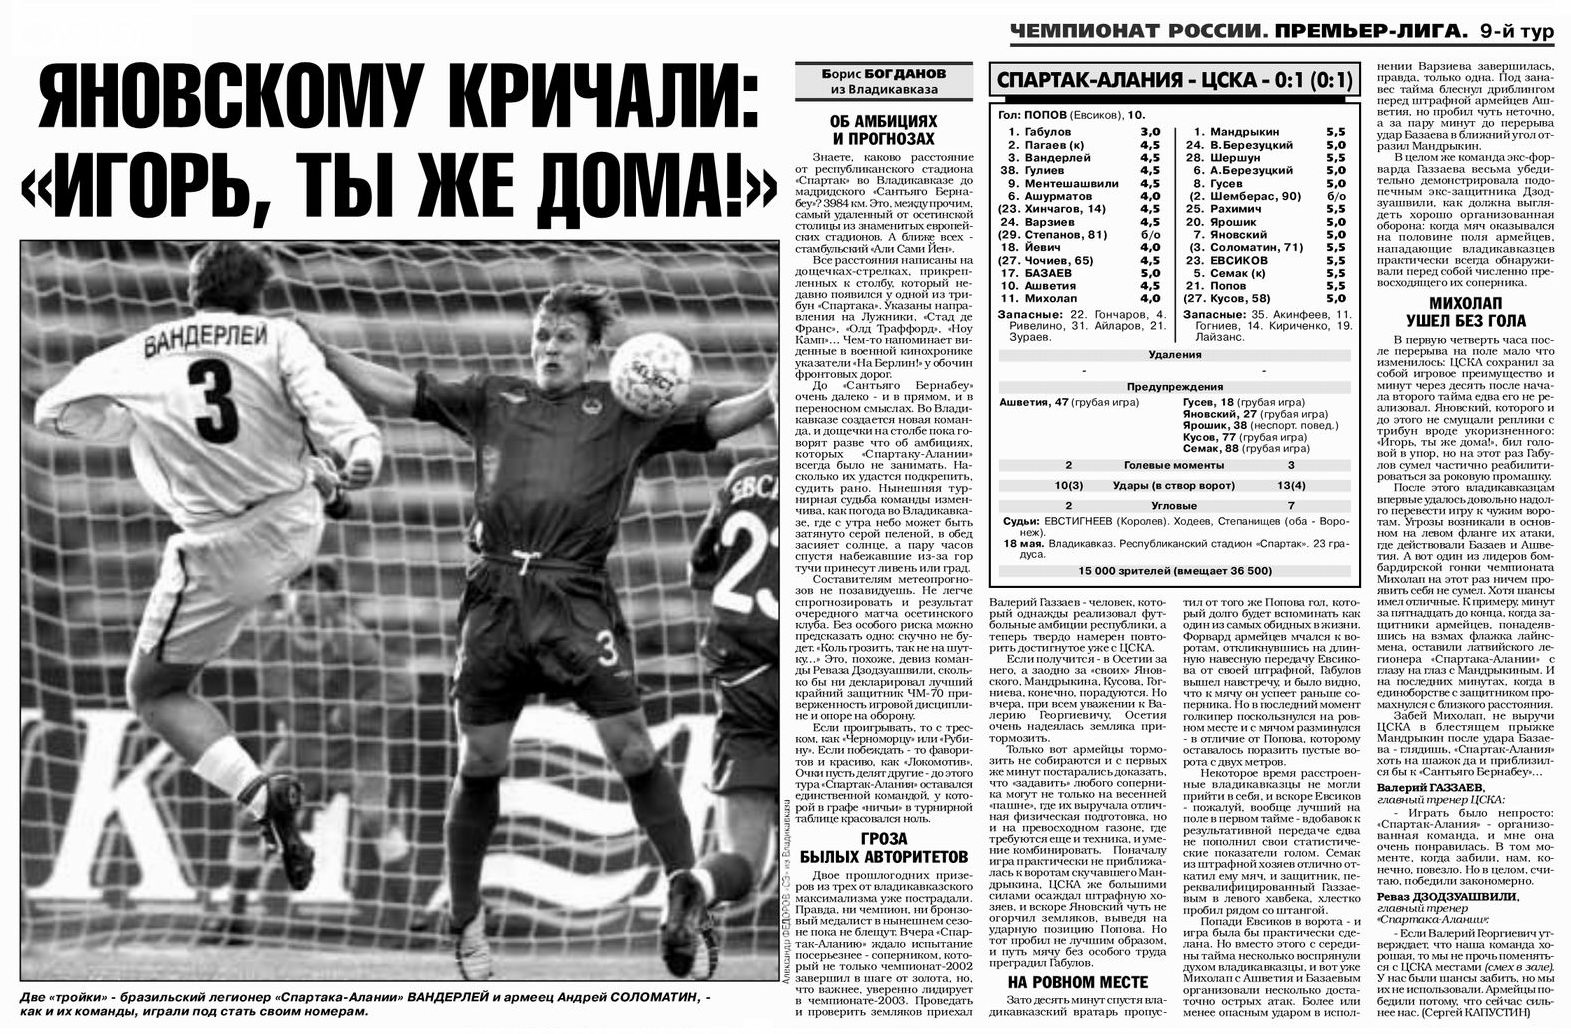 2003-05-18.SpartakAlanija-CSKA.1